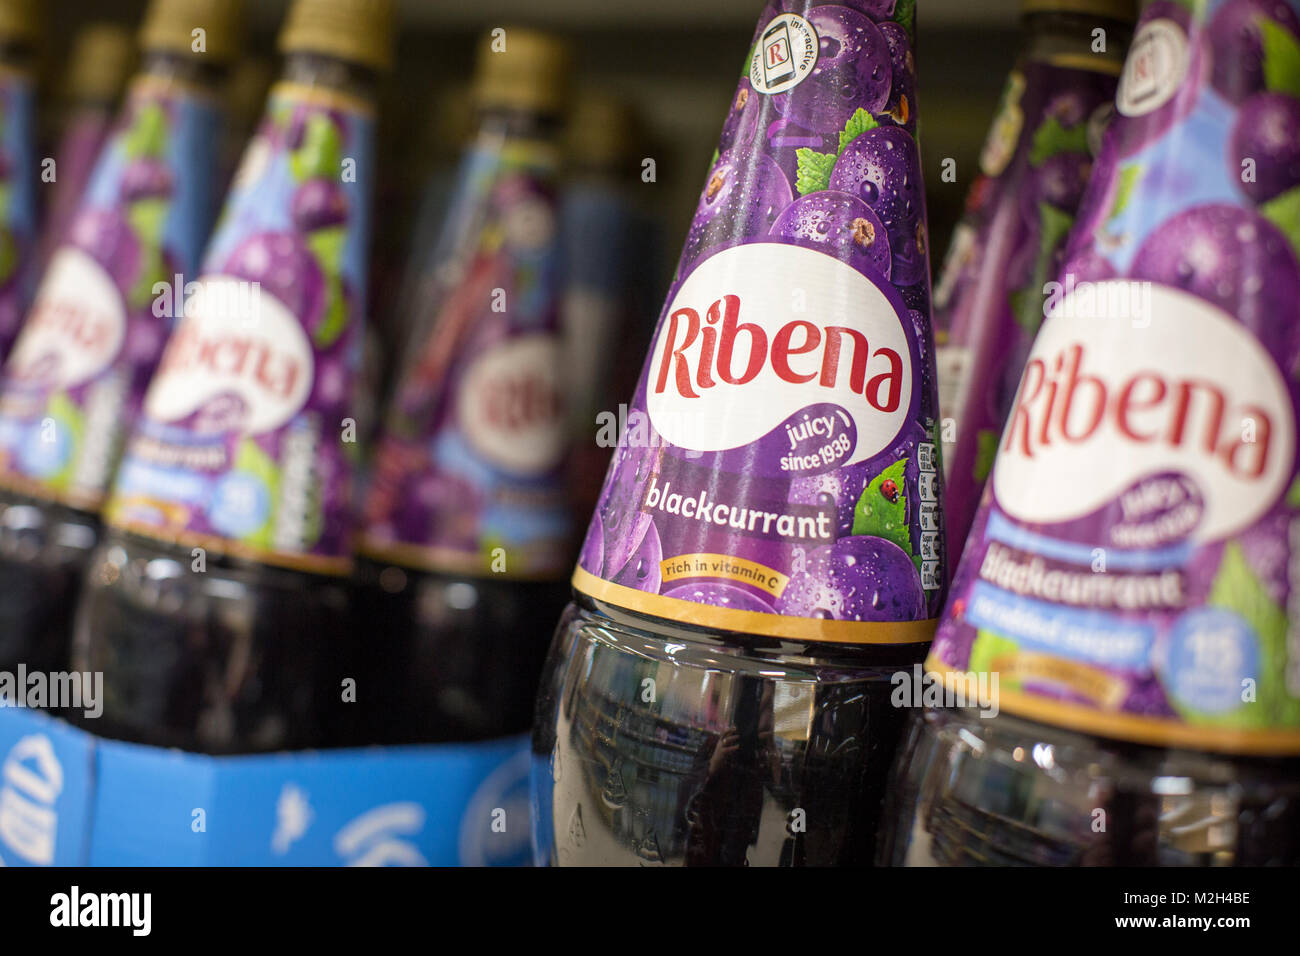 Ribena blackcurrant drink on supermarket shelves Stock Photo